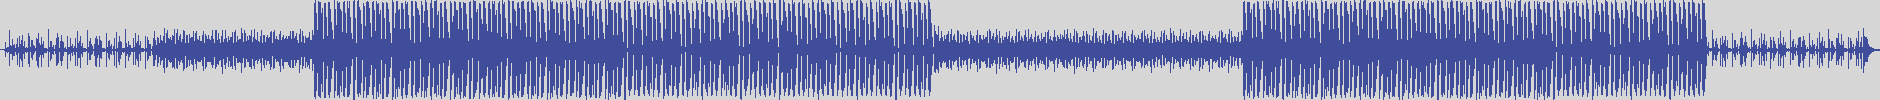 nf_boyz_records [NFY069] Dj Itan Renzetti - Muchacho Malo [Original Mix] audio wave form